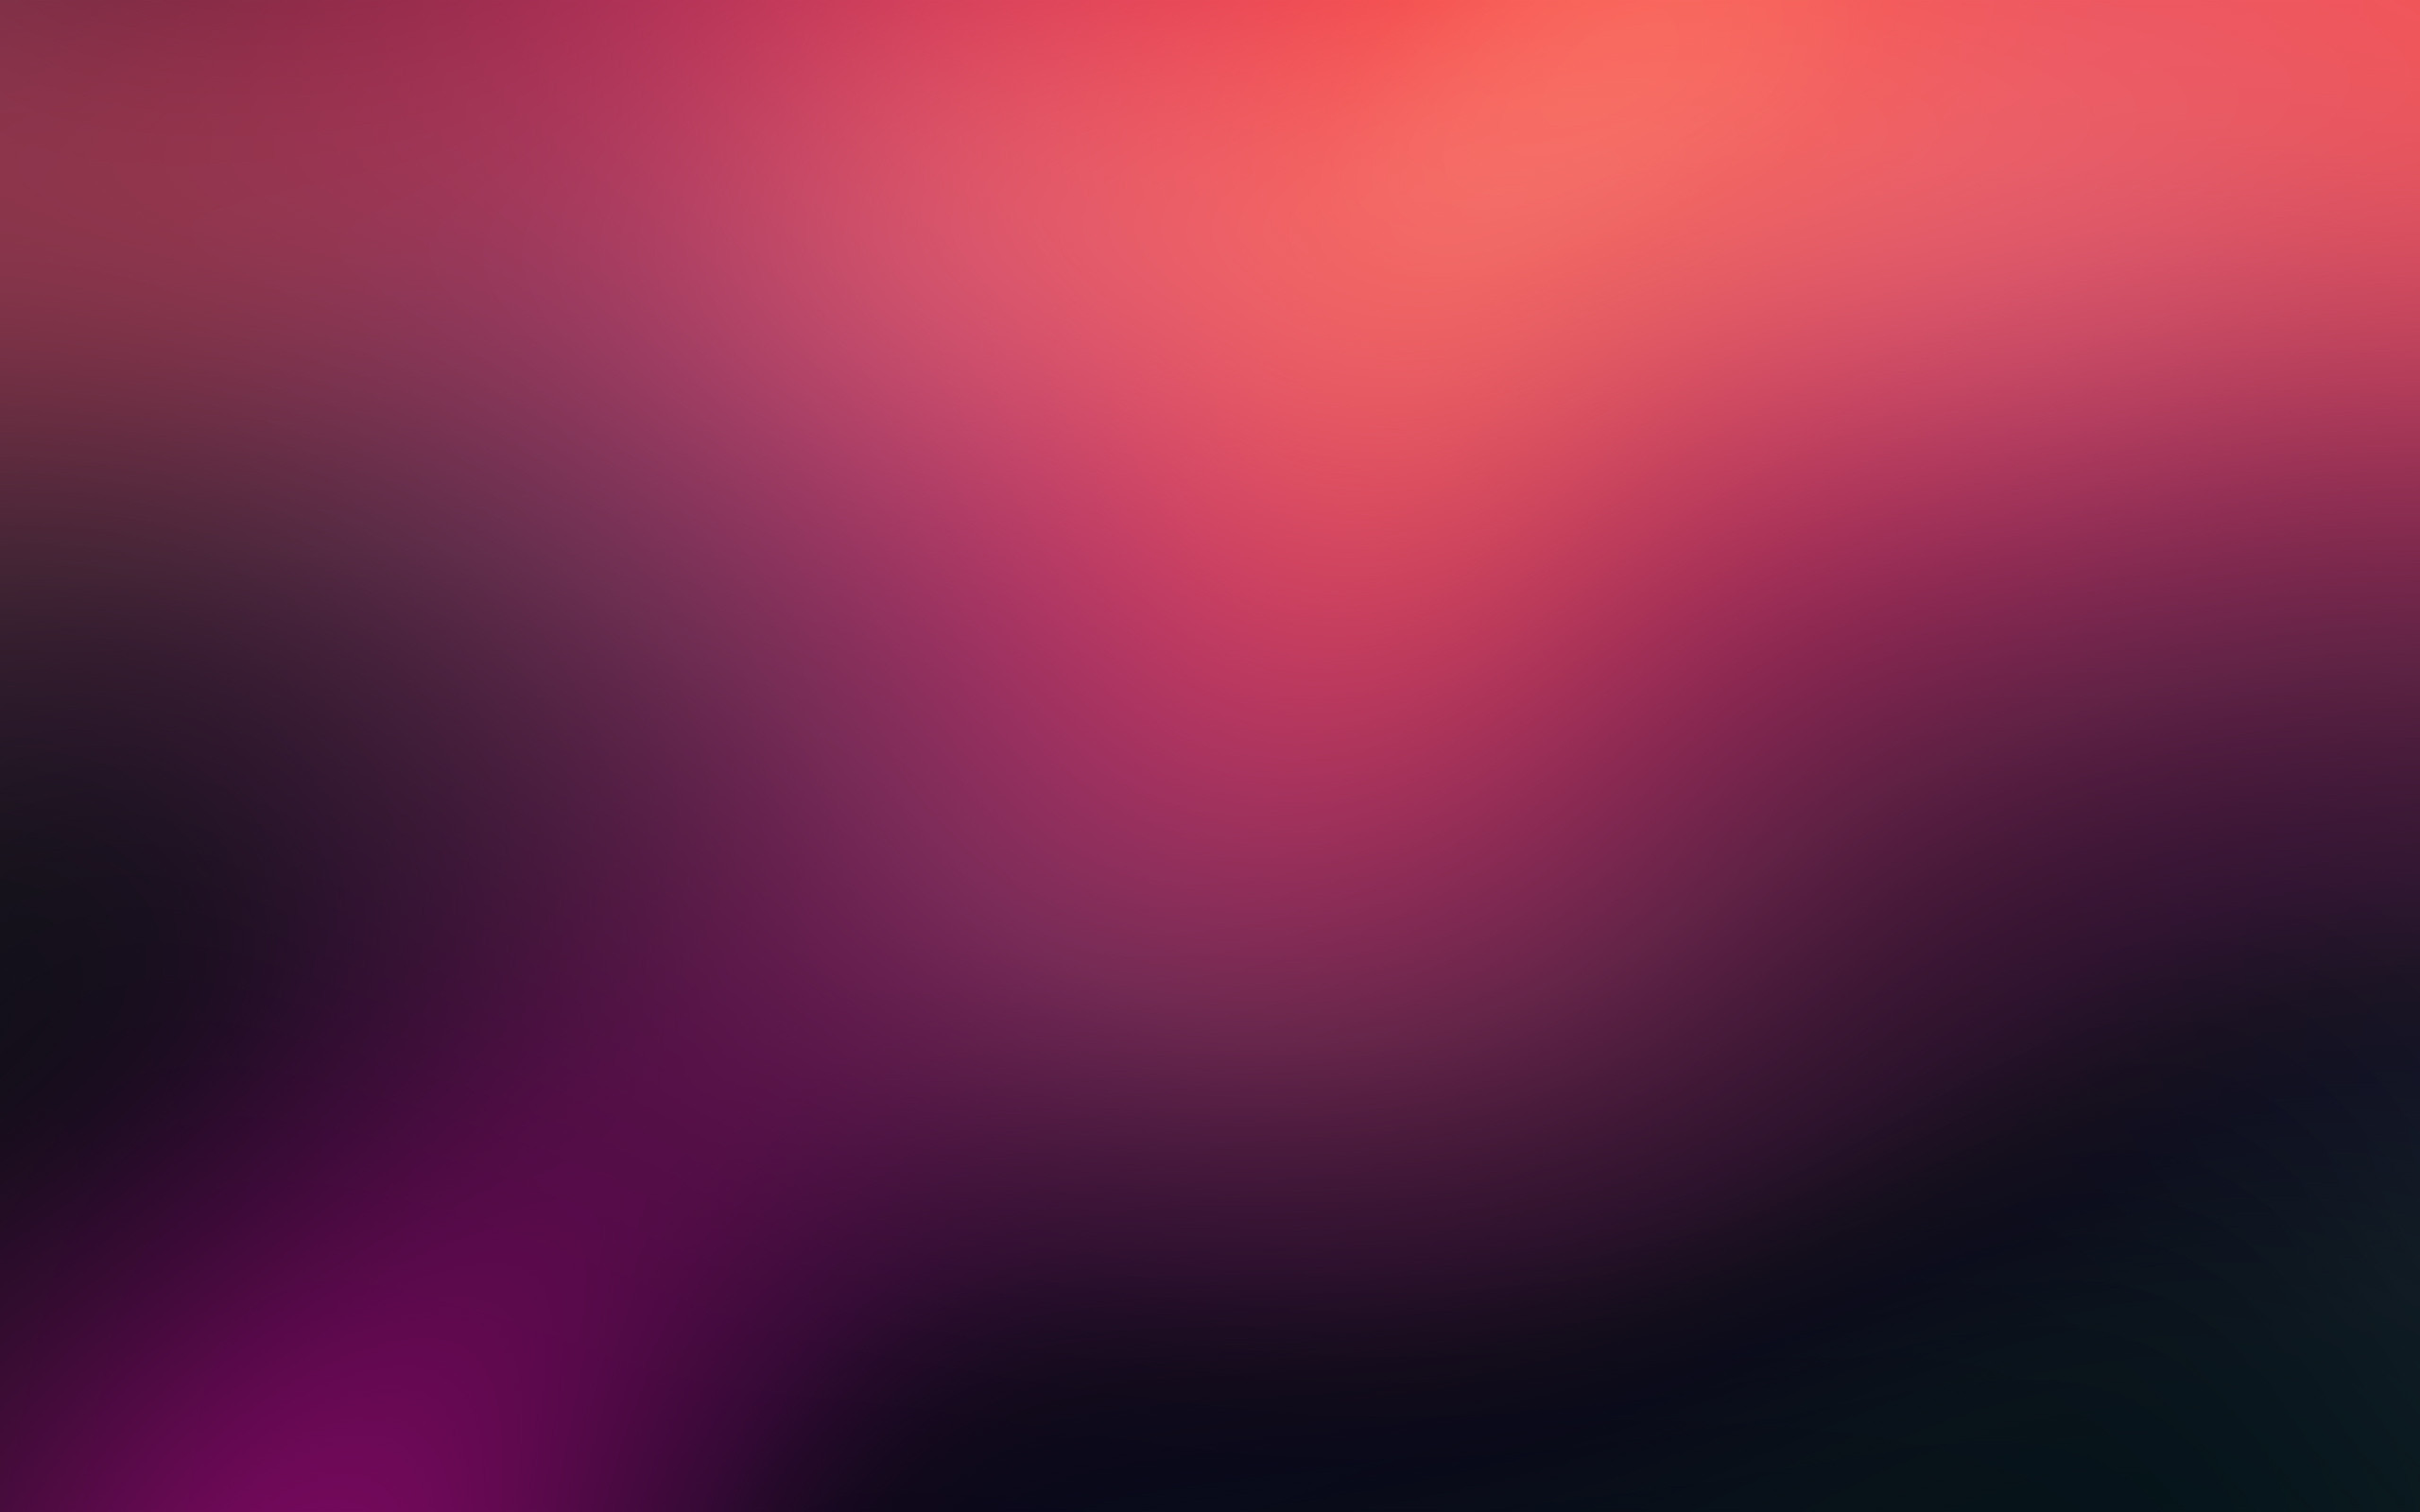 Warm Blurred Colors Wallpaper